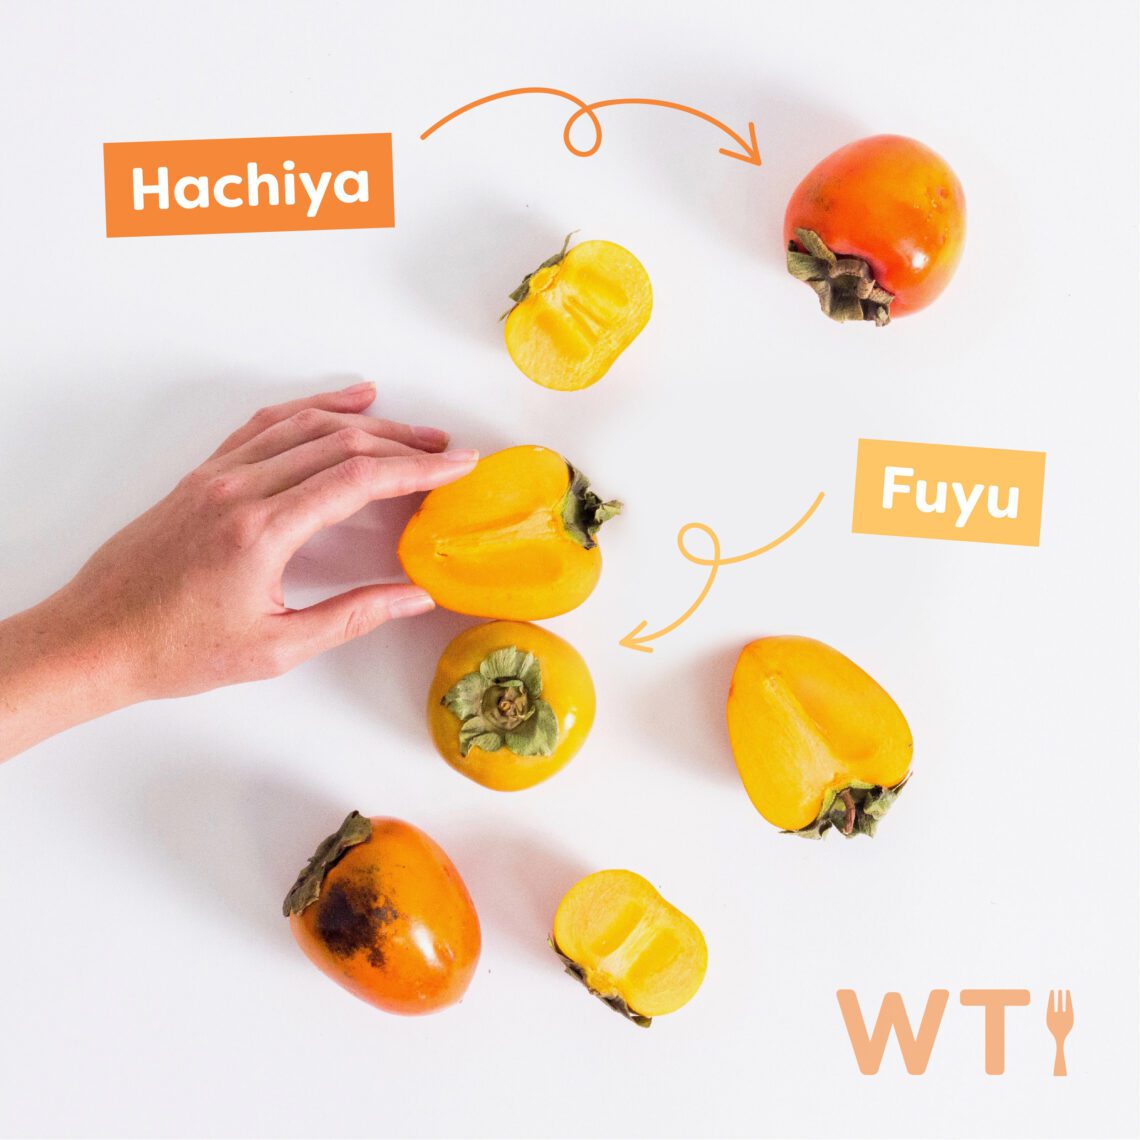 fuyu persimmons in season